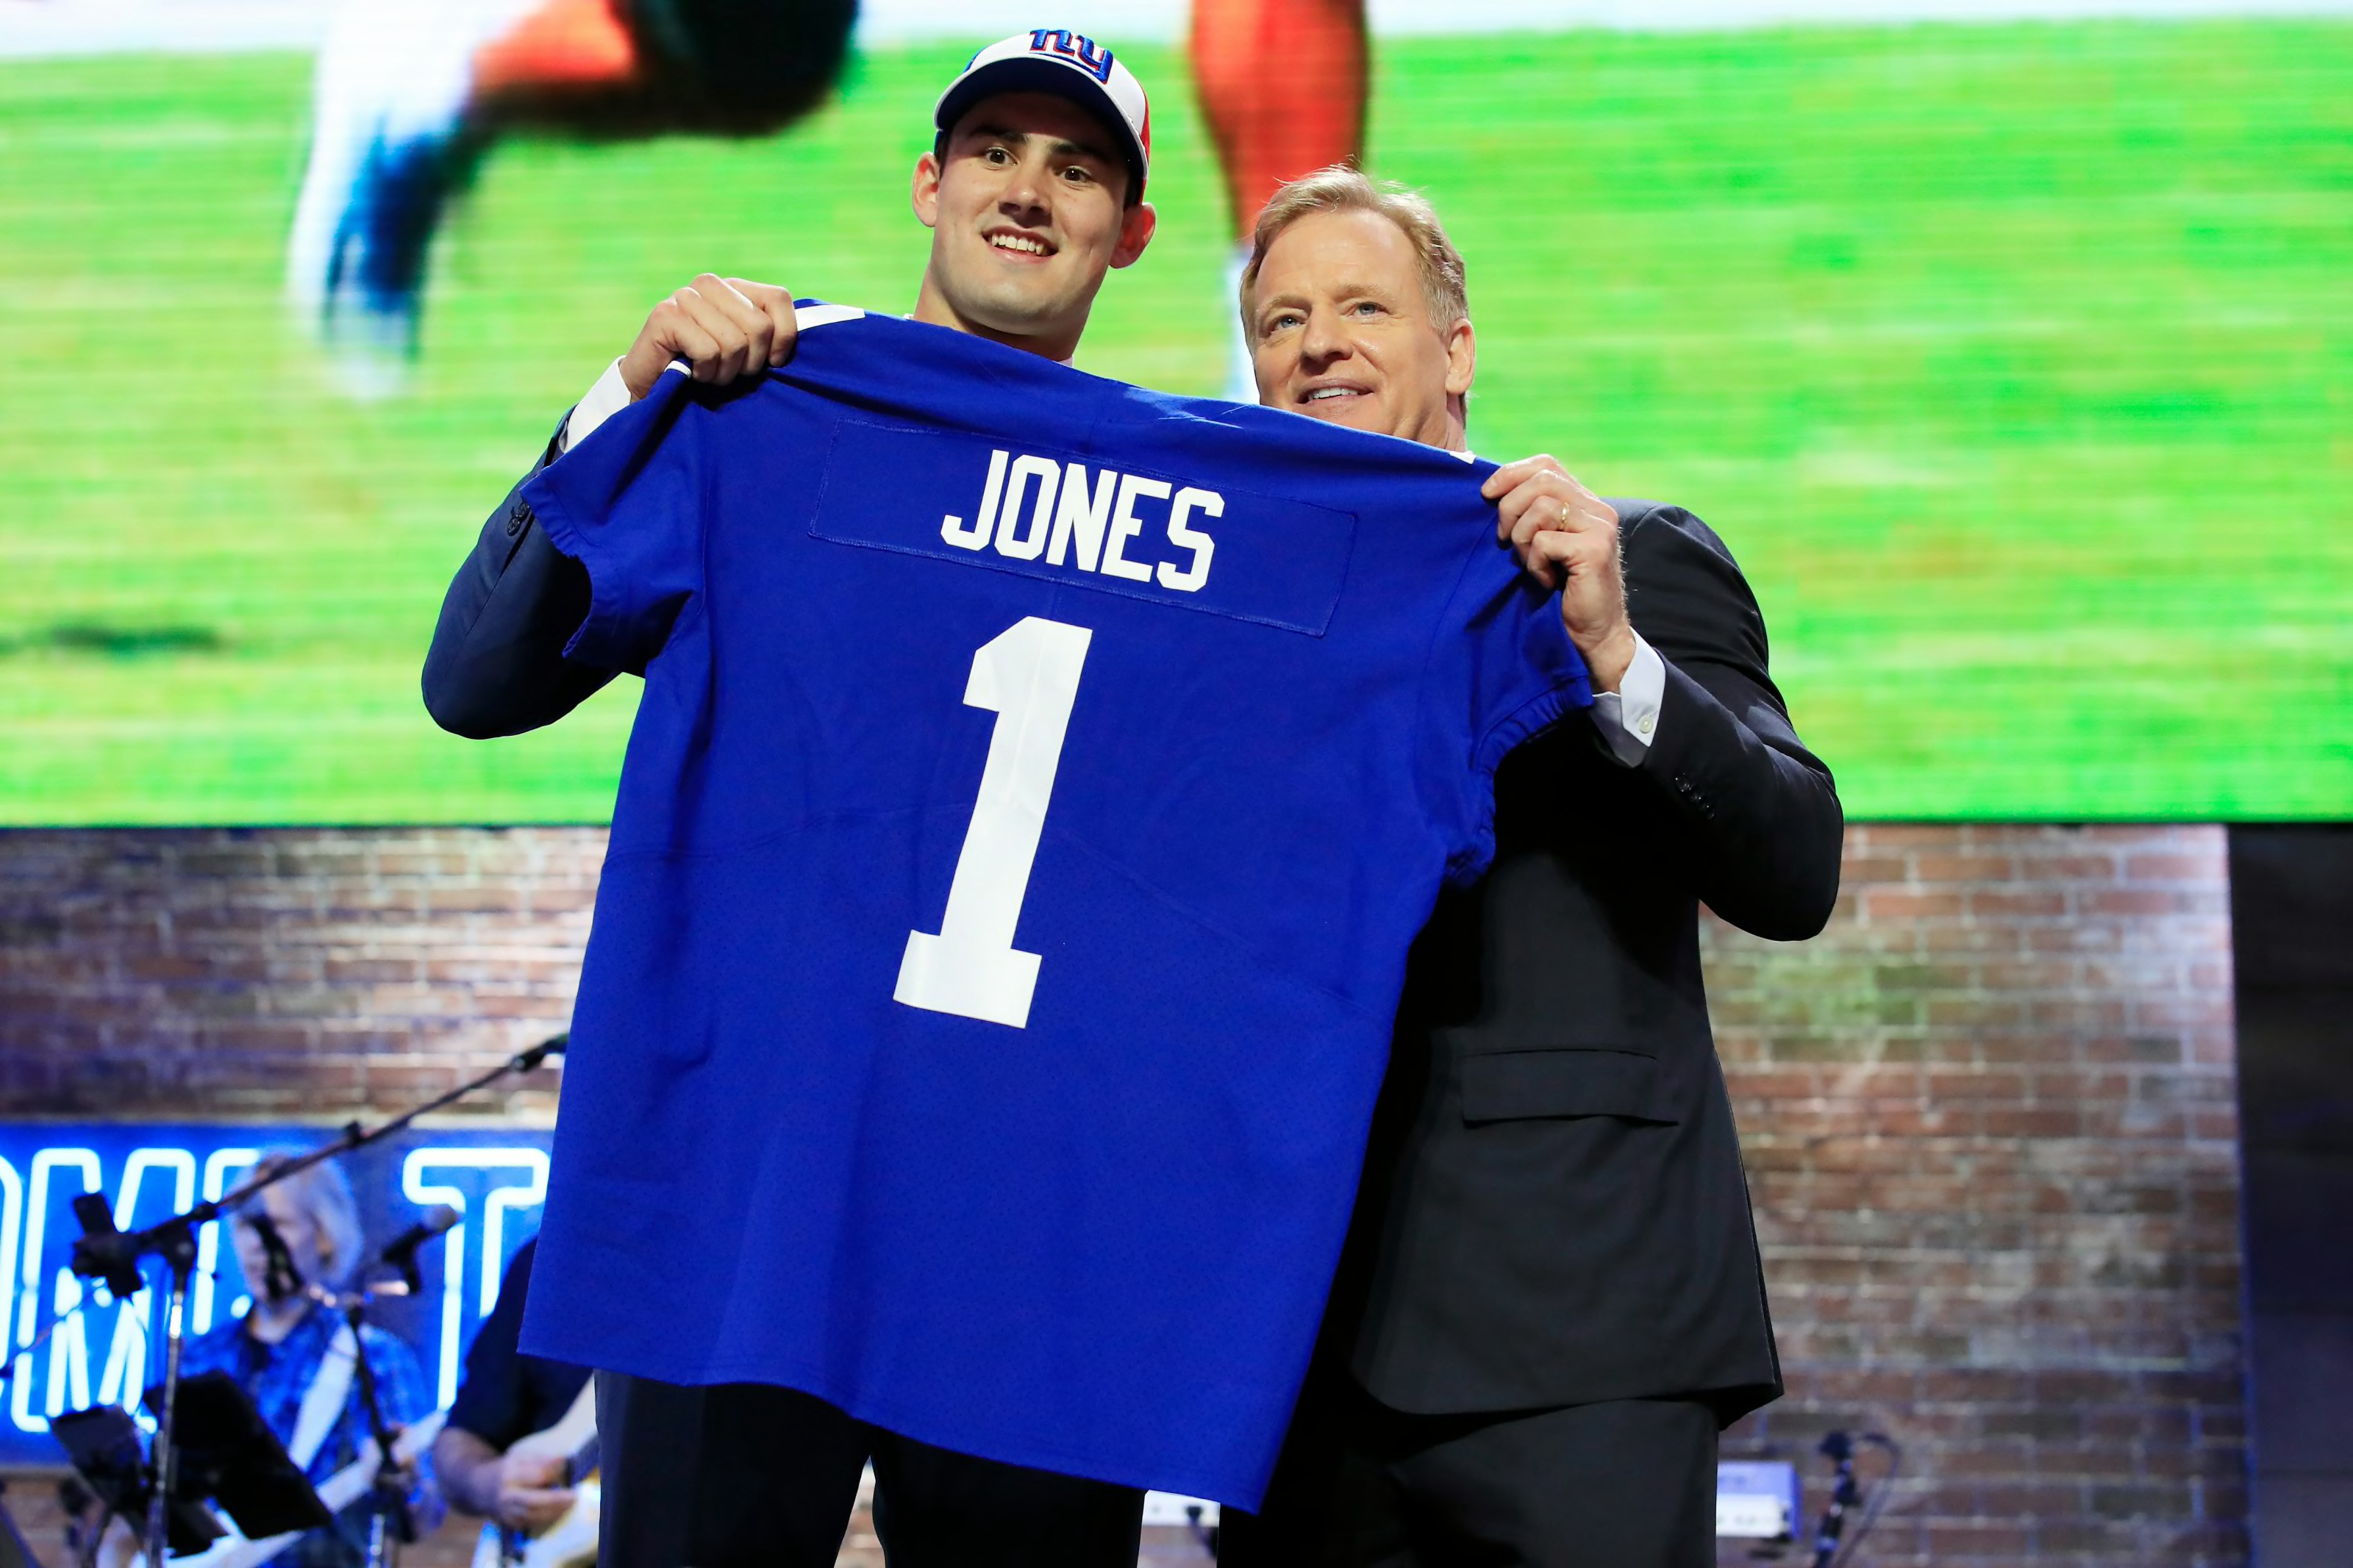 NFL Draft 2019: Giants select Daniel Jones